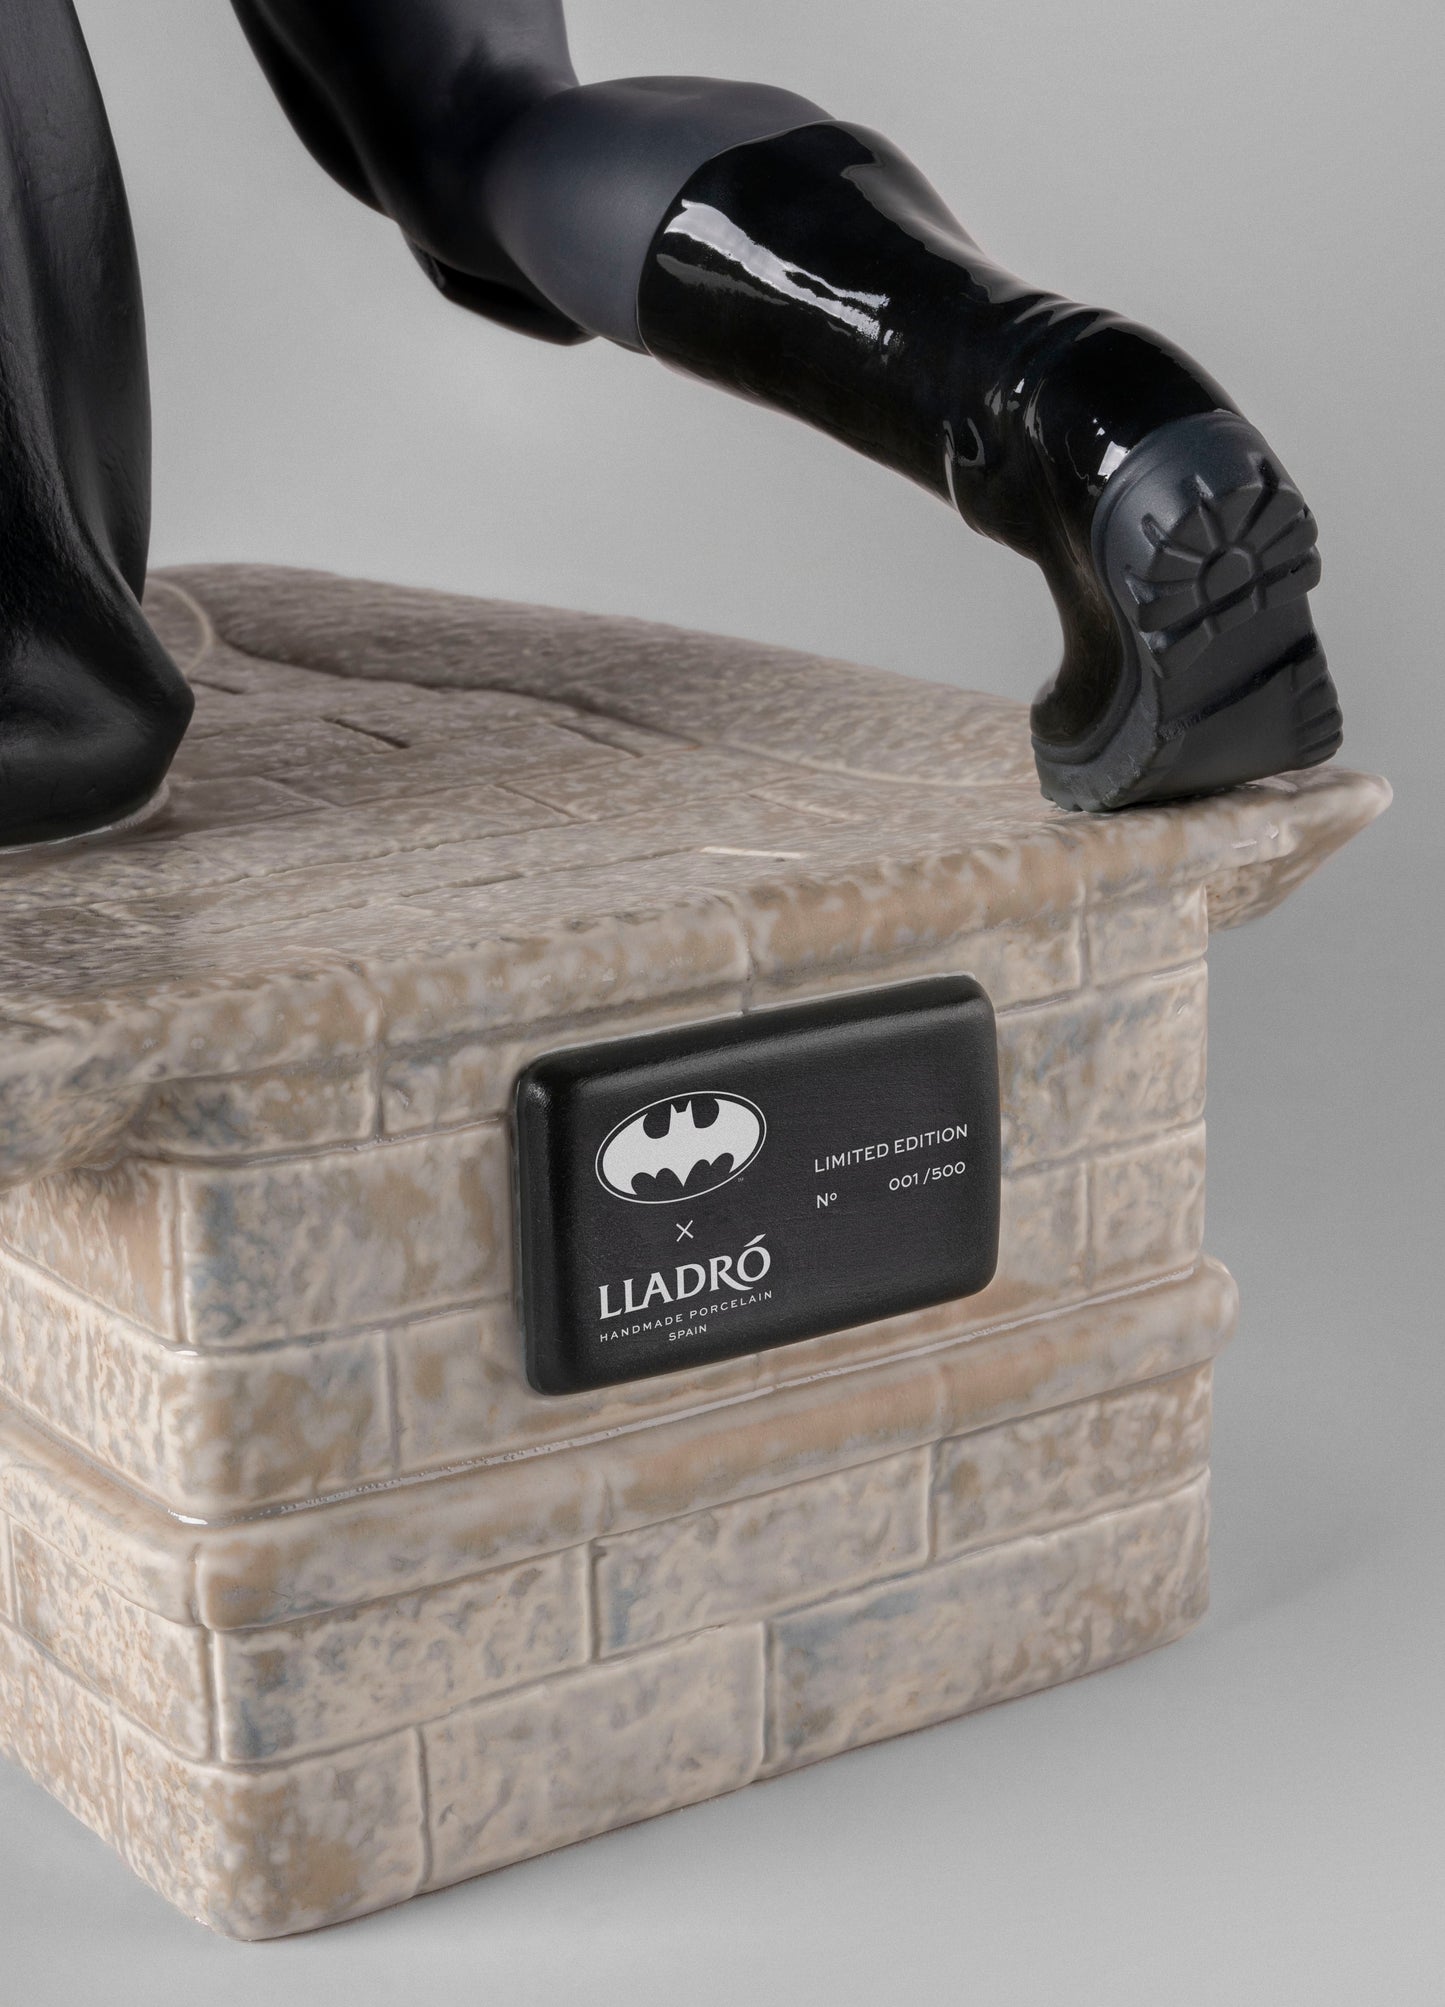 Batman Sculpture Limited Edition